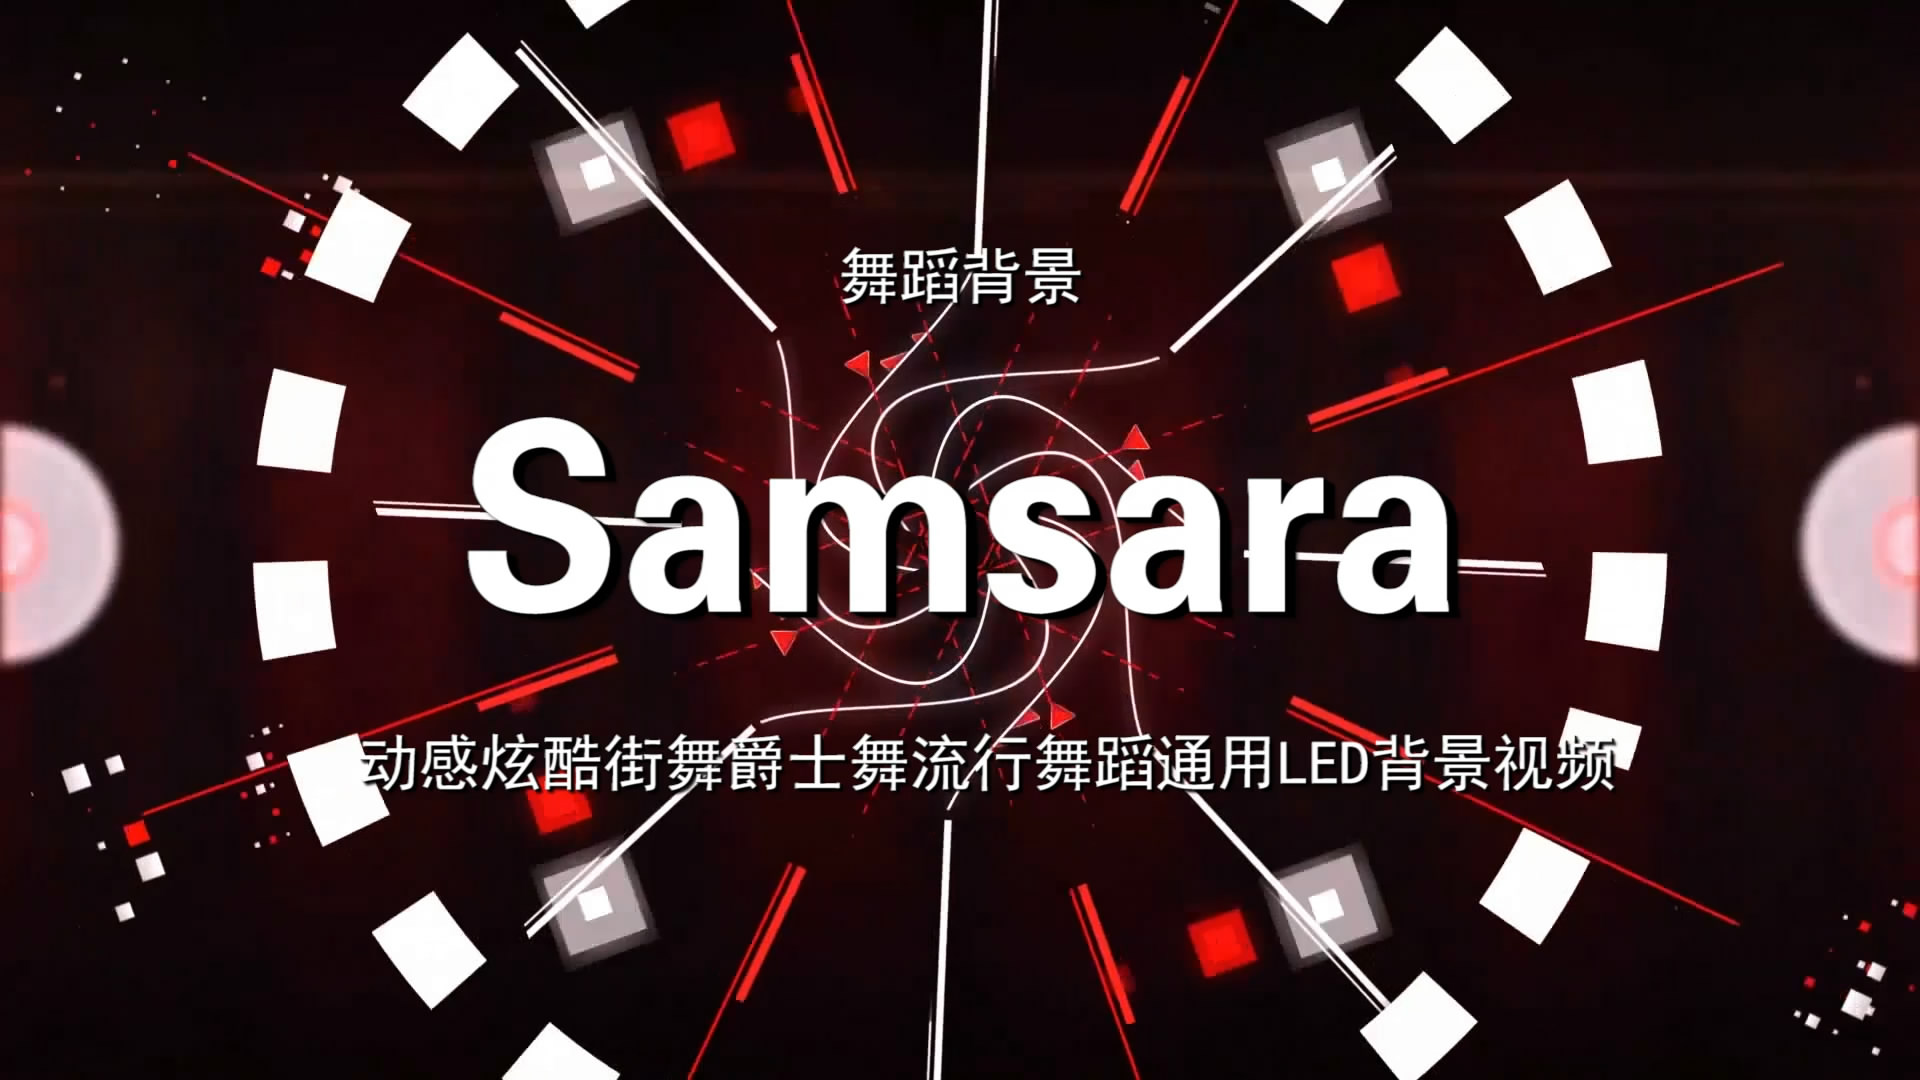 Samsara 动感炫酷街舞流行歌舞LED背景大屏幕视频素